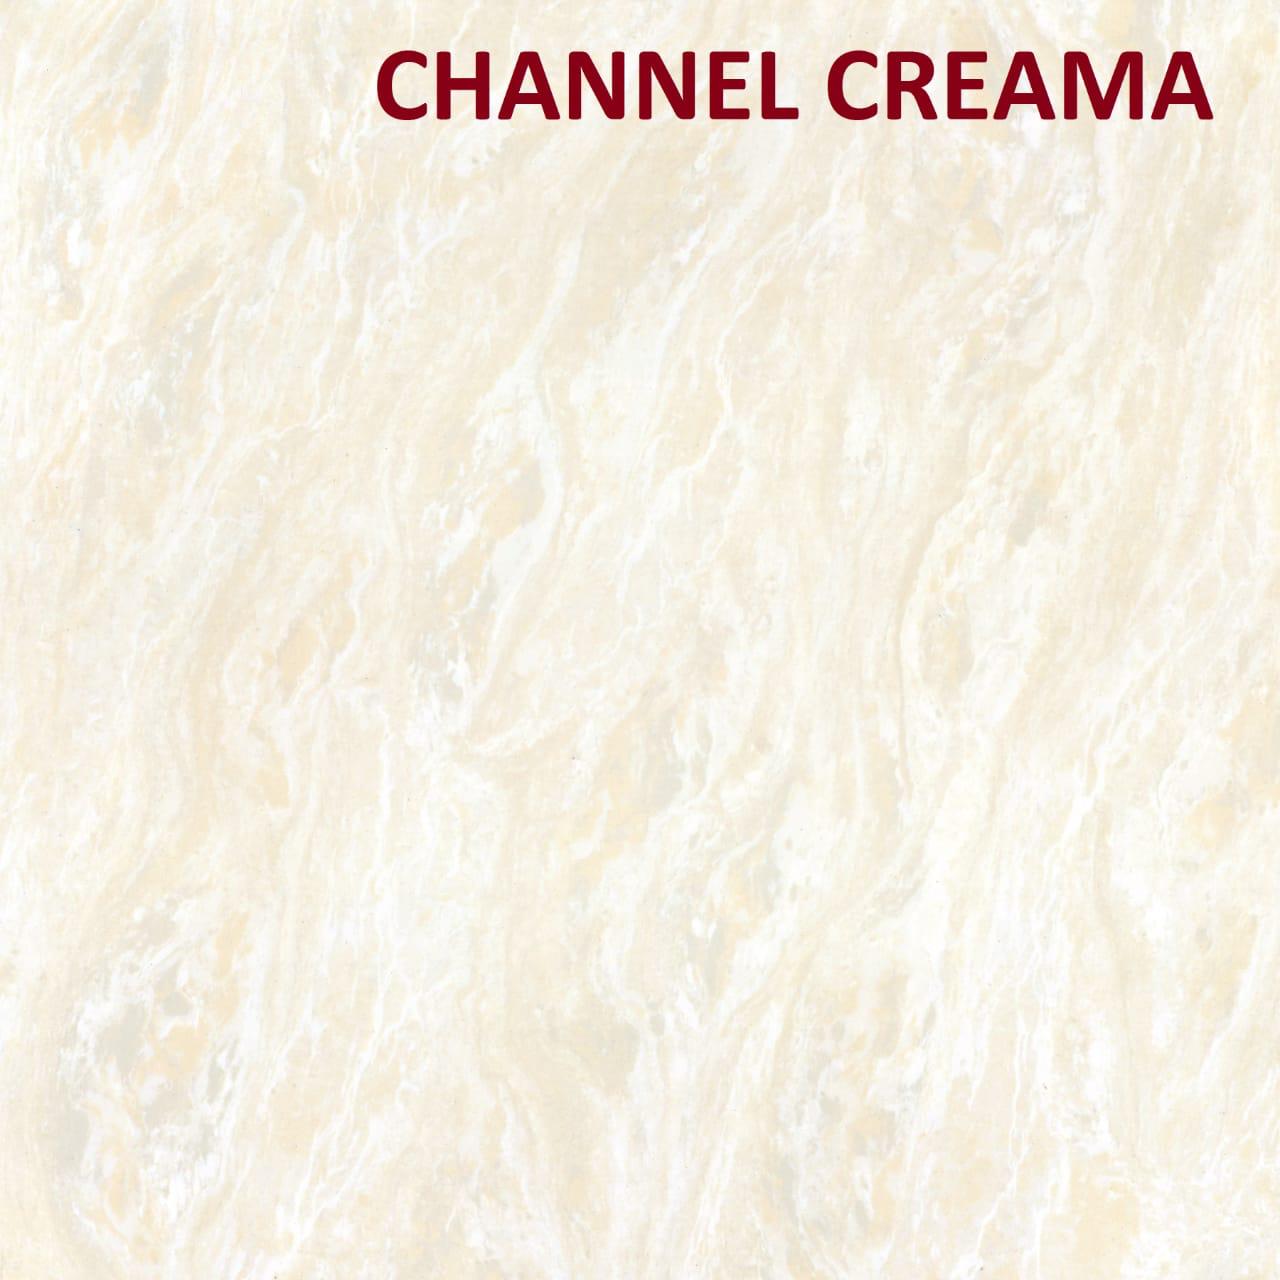 Channel Creama